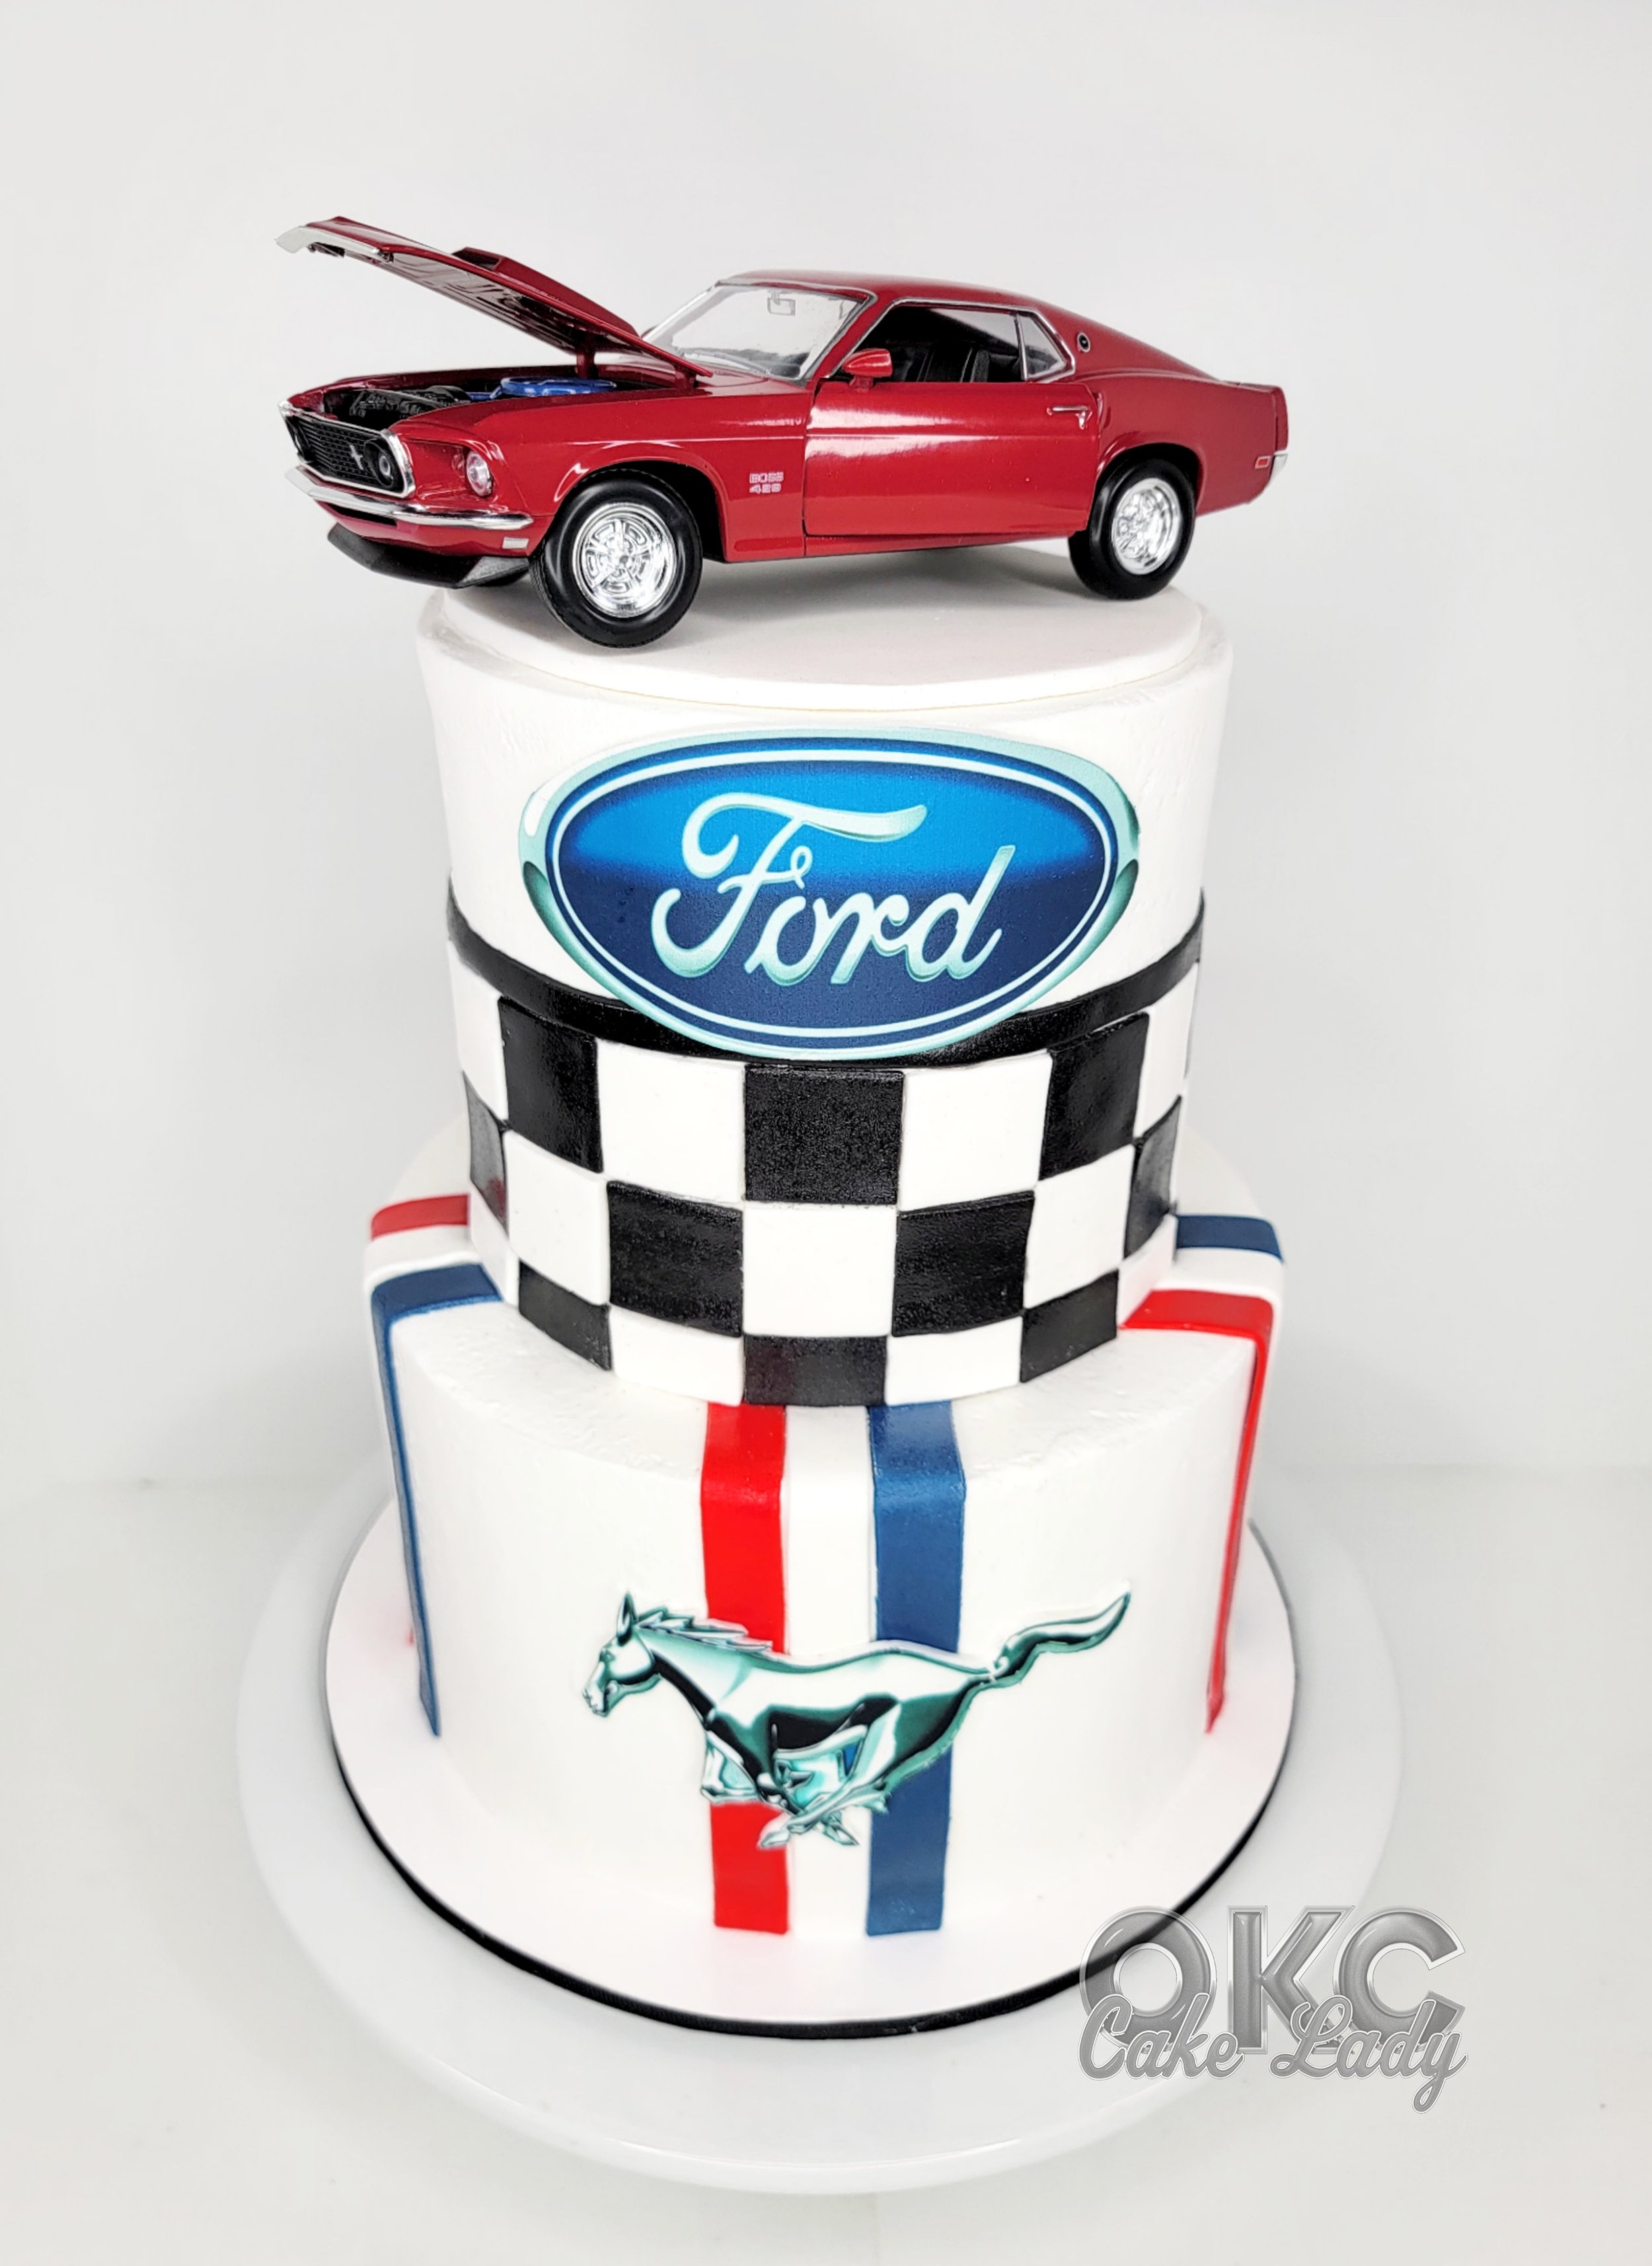 Ford Mustang cake | Cars birthday cake, Car cake, Twin birthday cakes